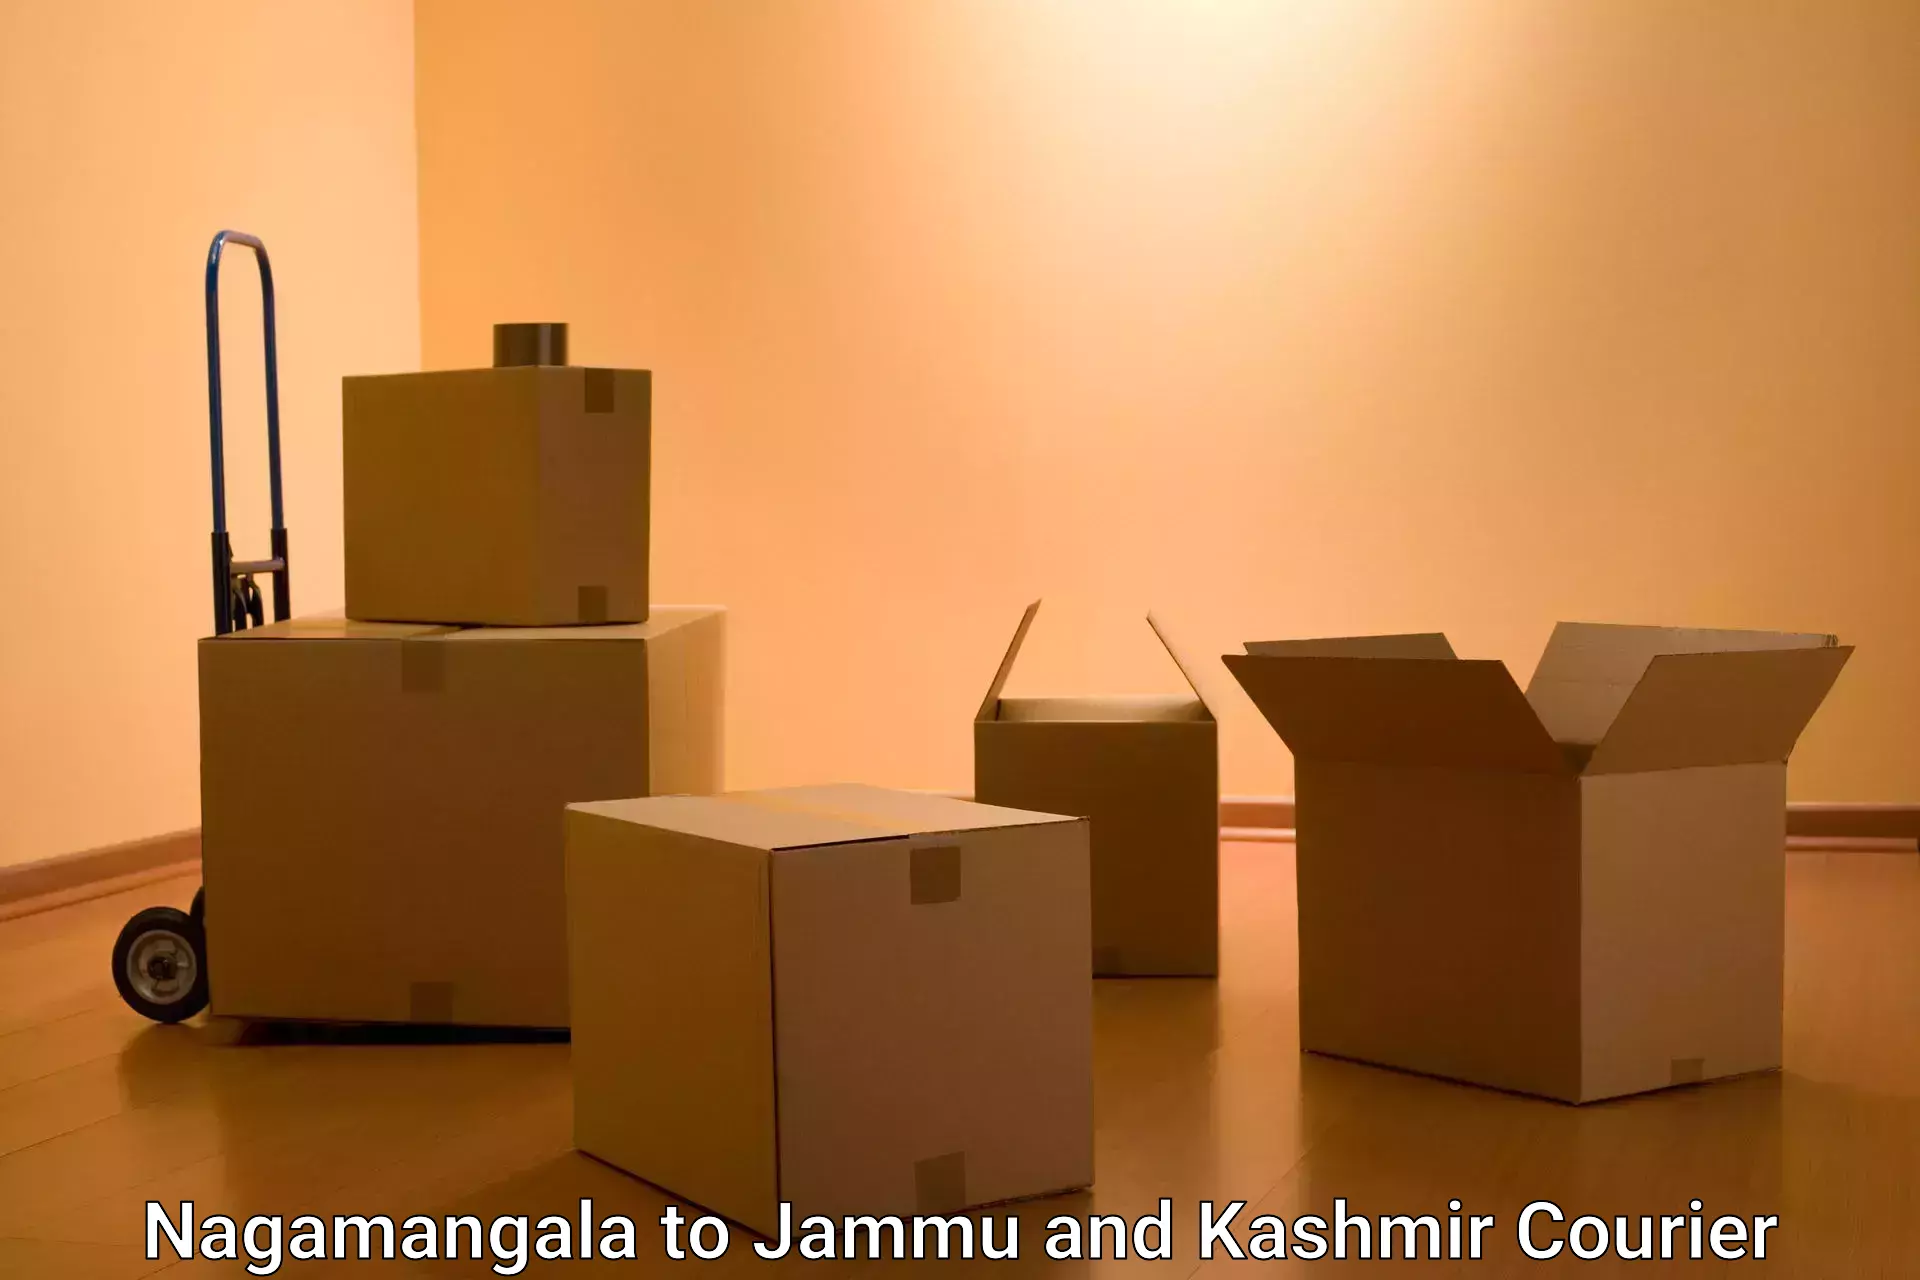 Express delivery network Nagamangala to University of Jammu